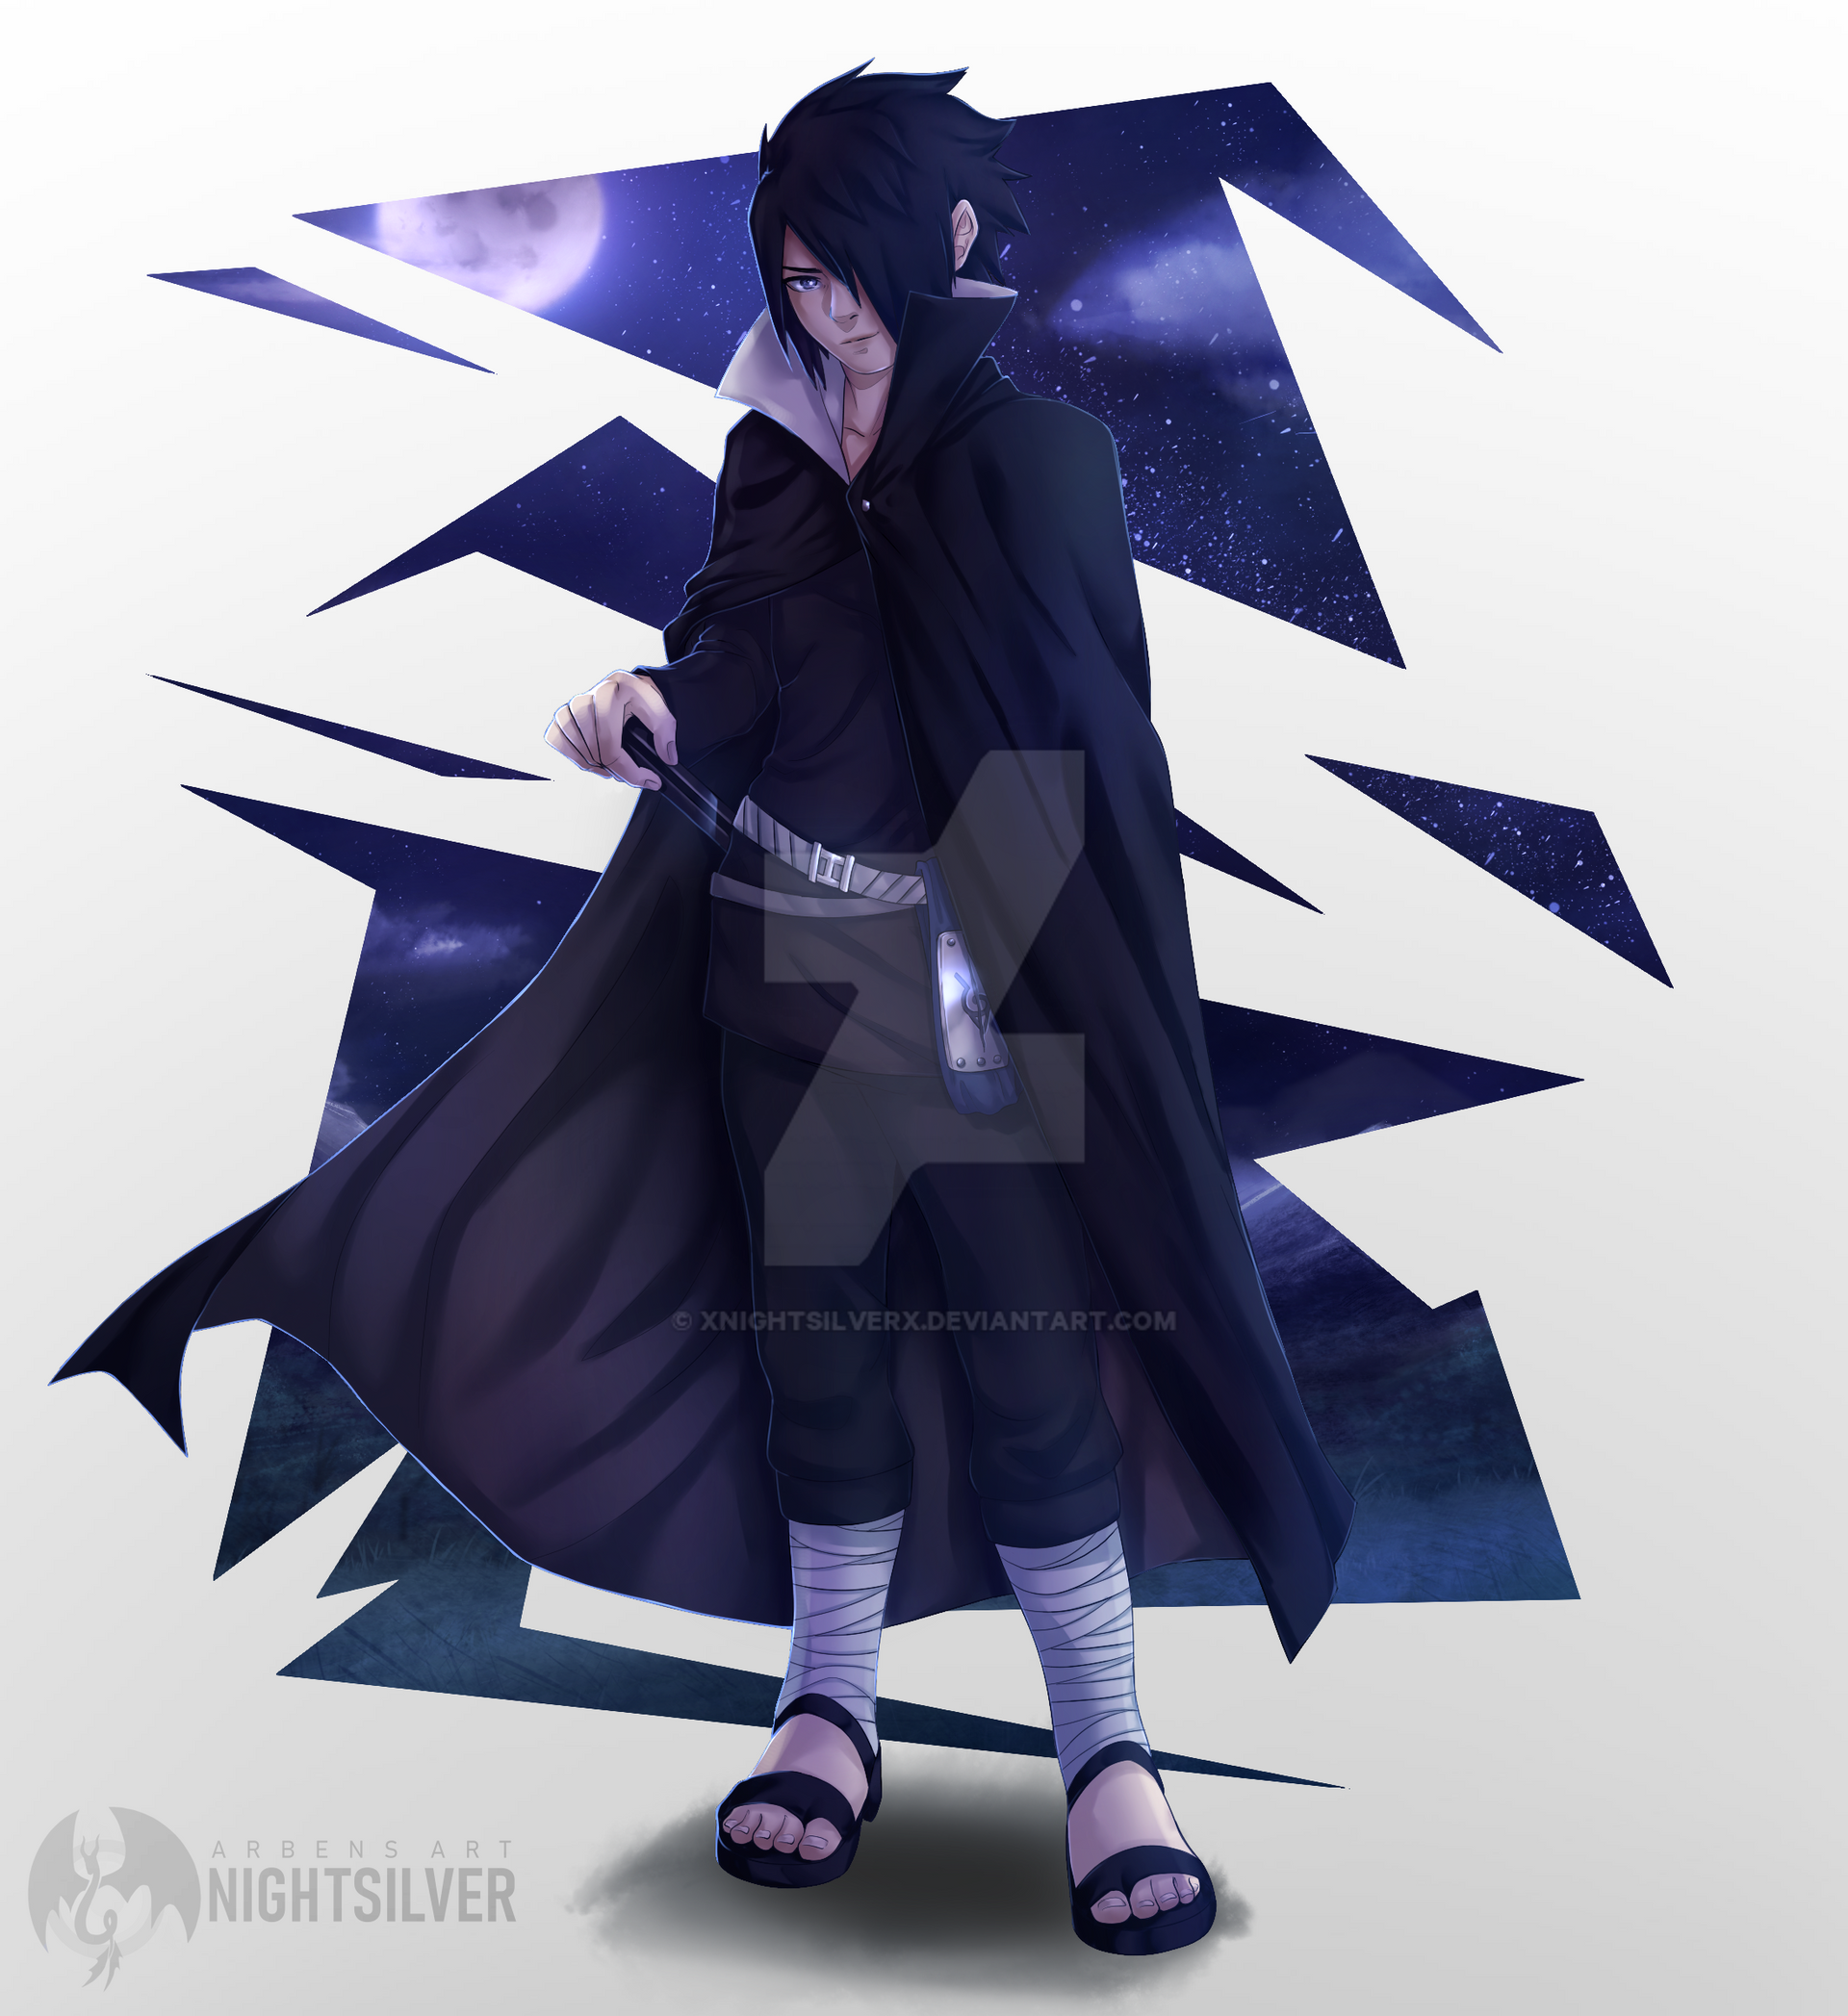 Uchiha Sasuke by Dattexx on DeviantArt